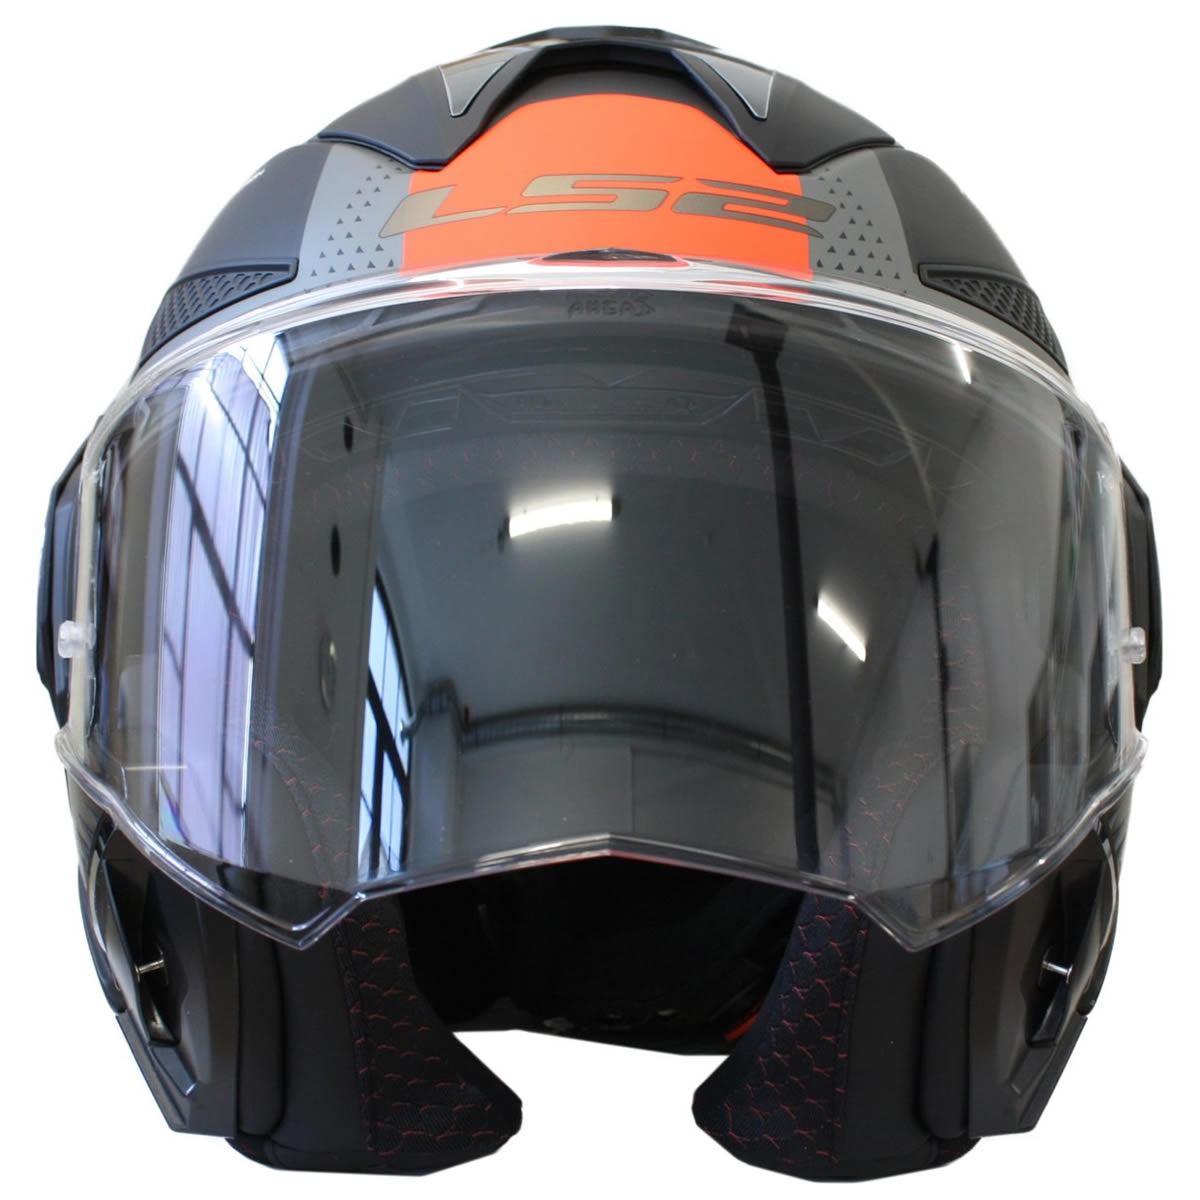 LS2 Helmets Klapphelm Advant X Oblivion FF901, schwarz-titan matt